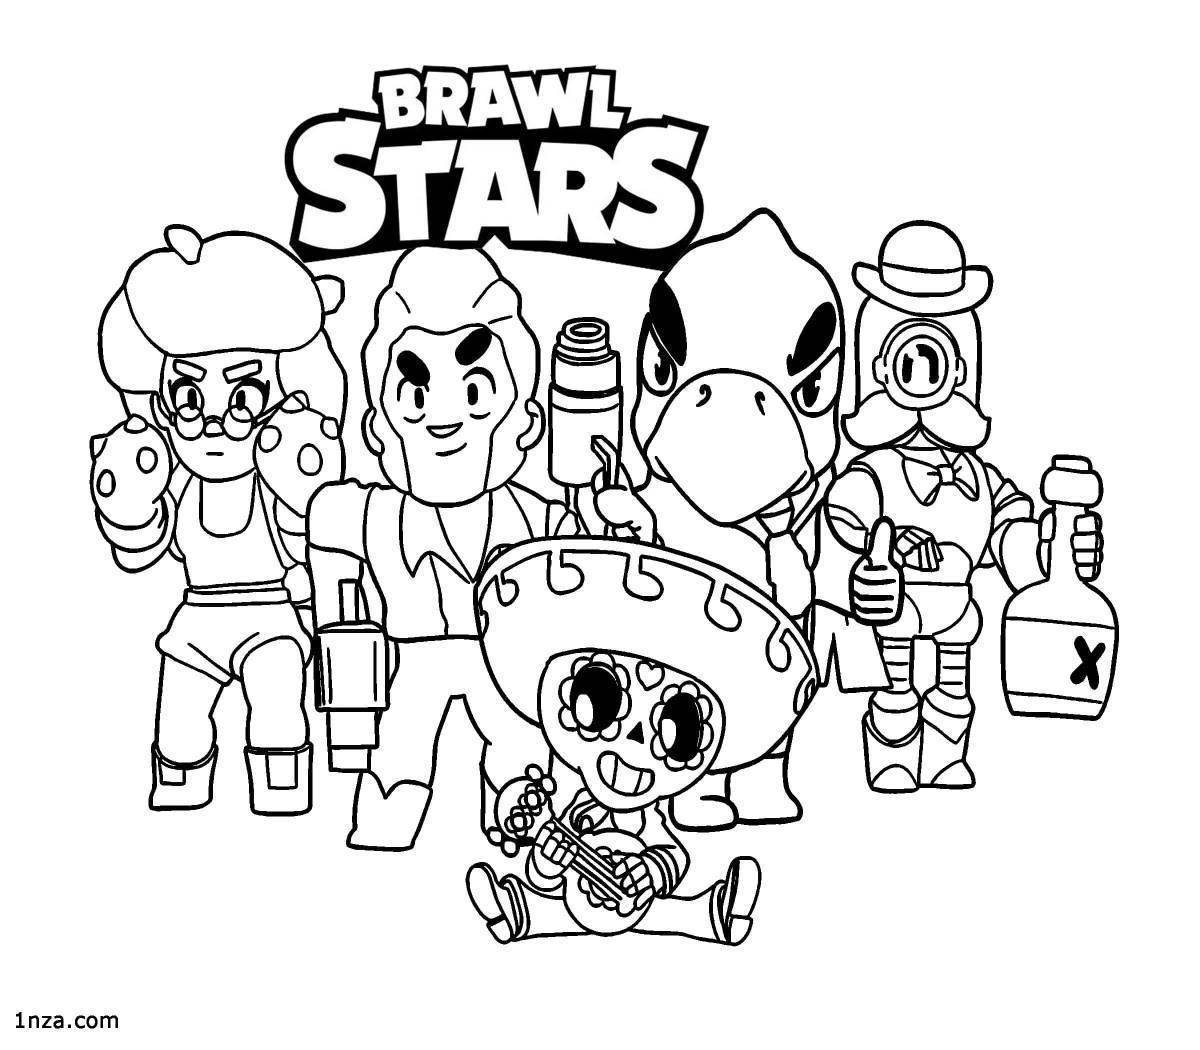 Colorful bravo stars coloring game